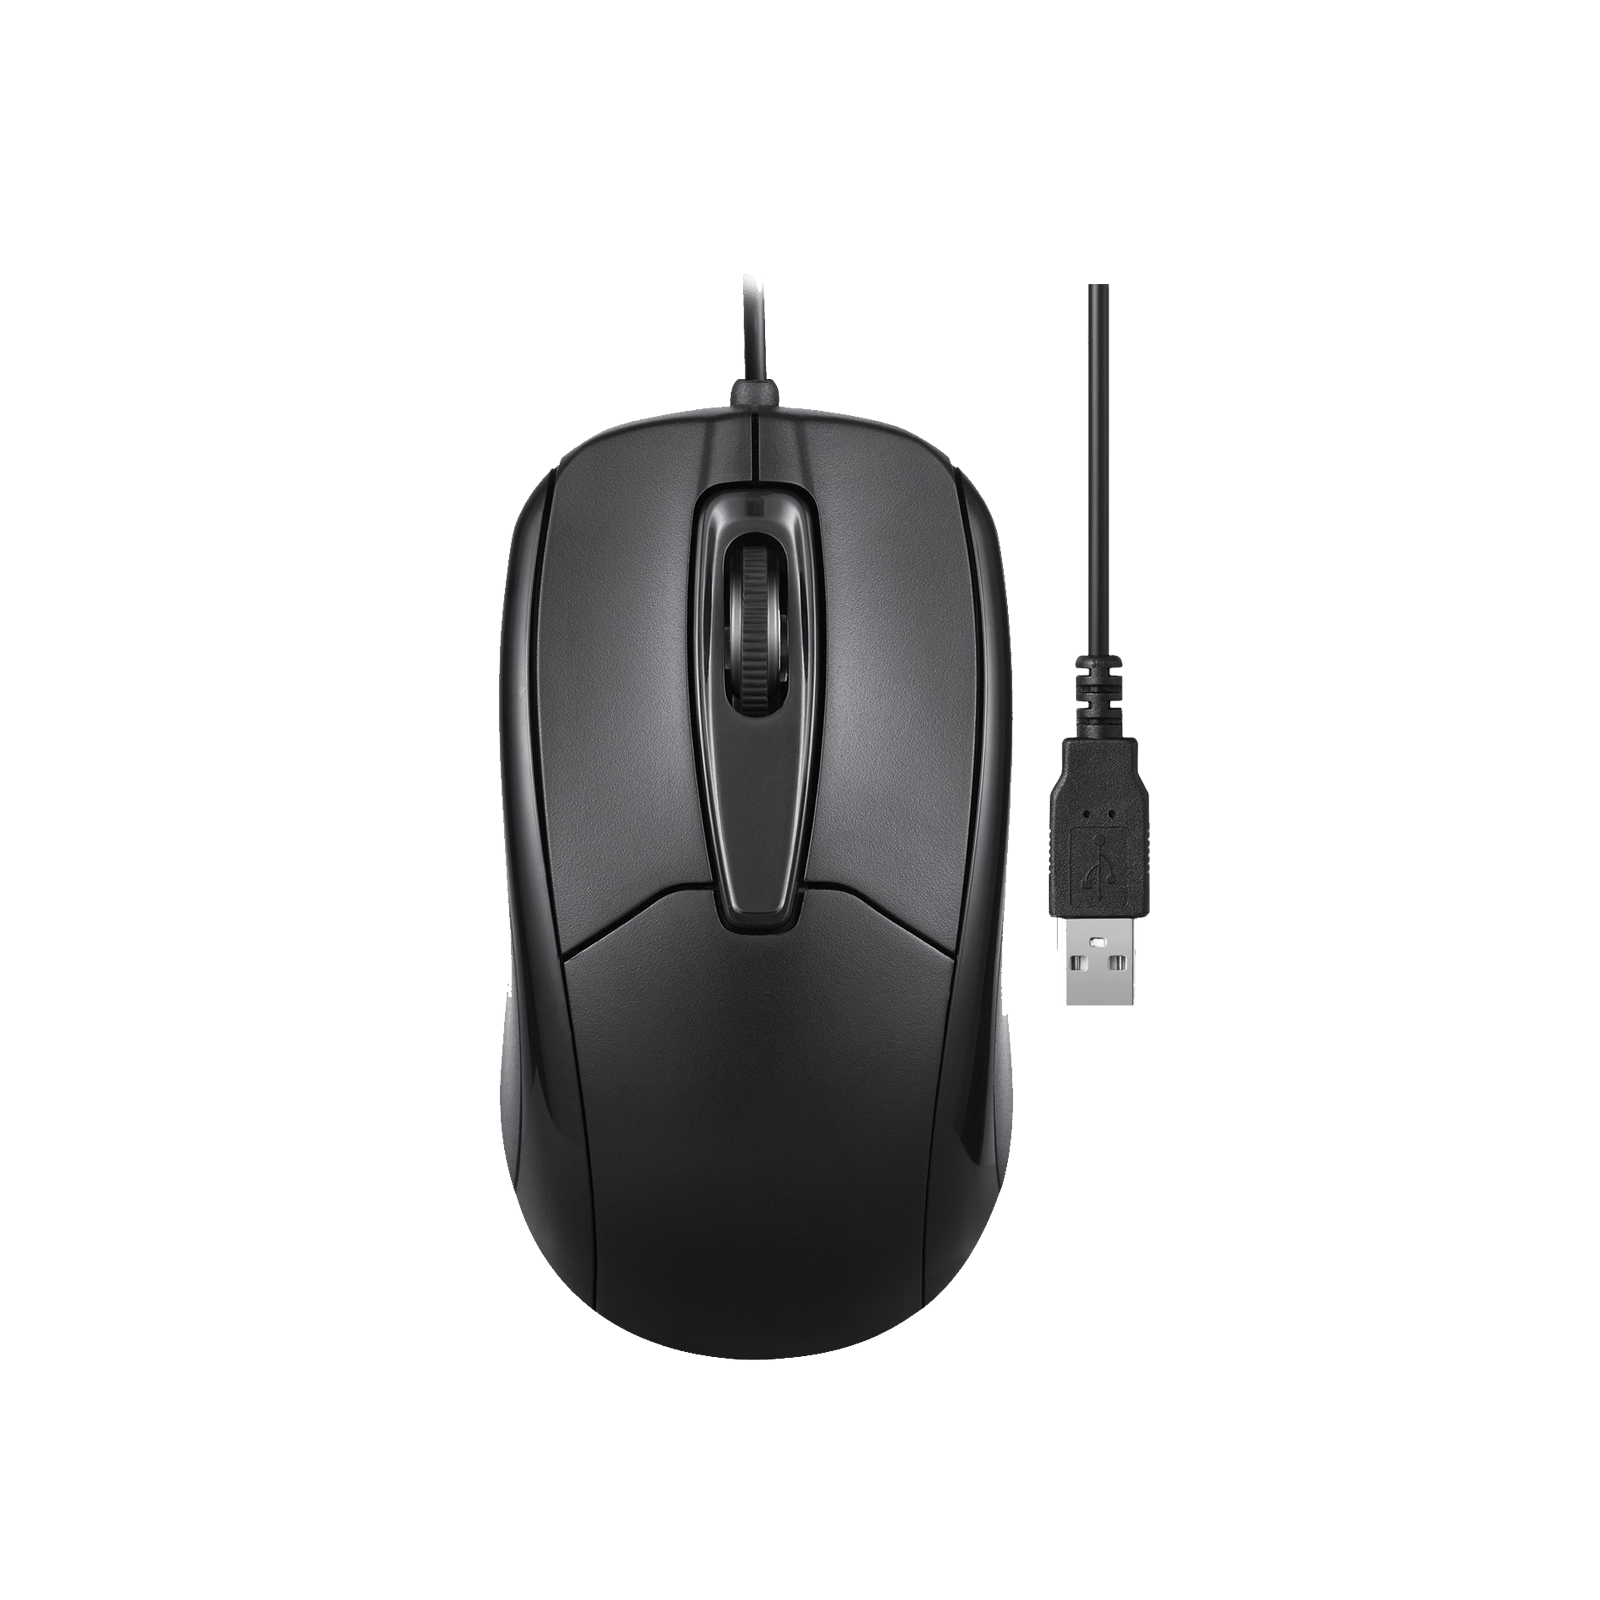 PERIMICE-209 U - Wired USB Mouse - Perixx Europe